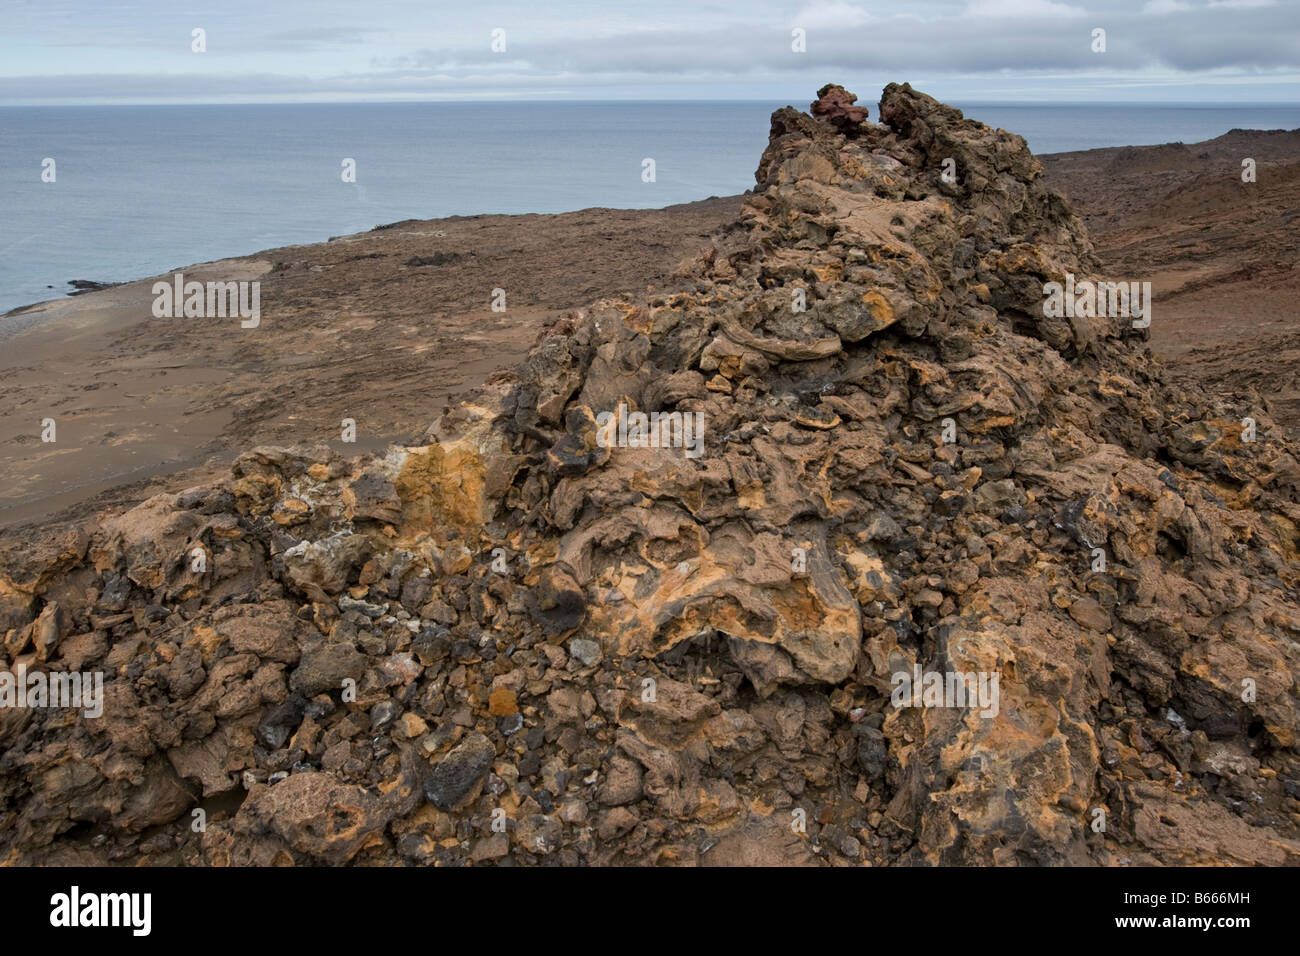 Ecuador Galapagos Islands National Park Bartolome Island Desolate volcanic landscape Stock Photo